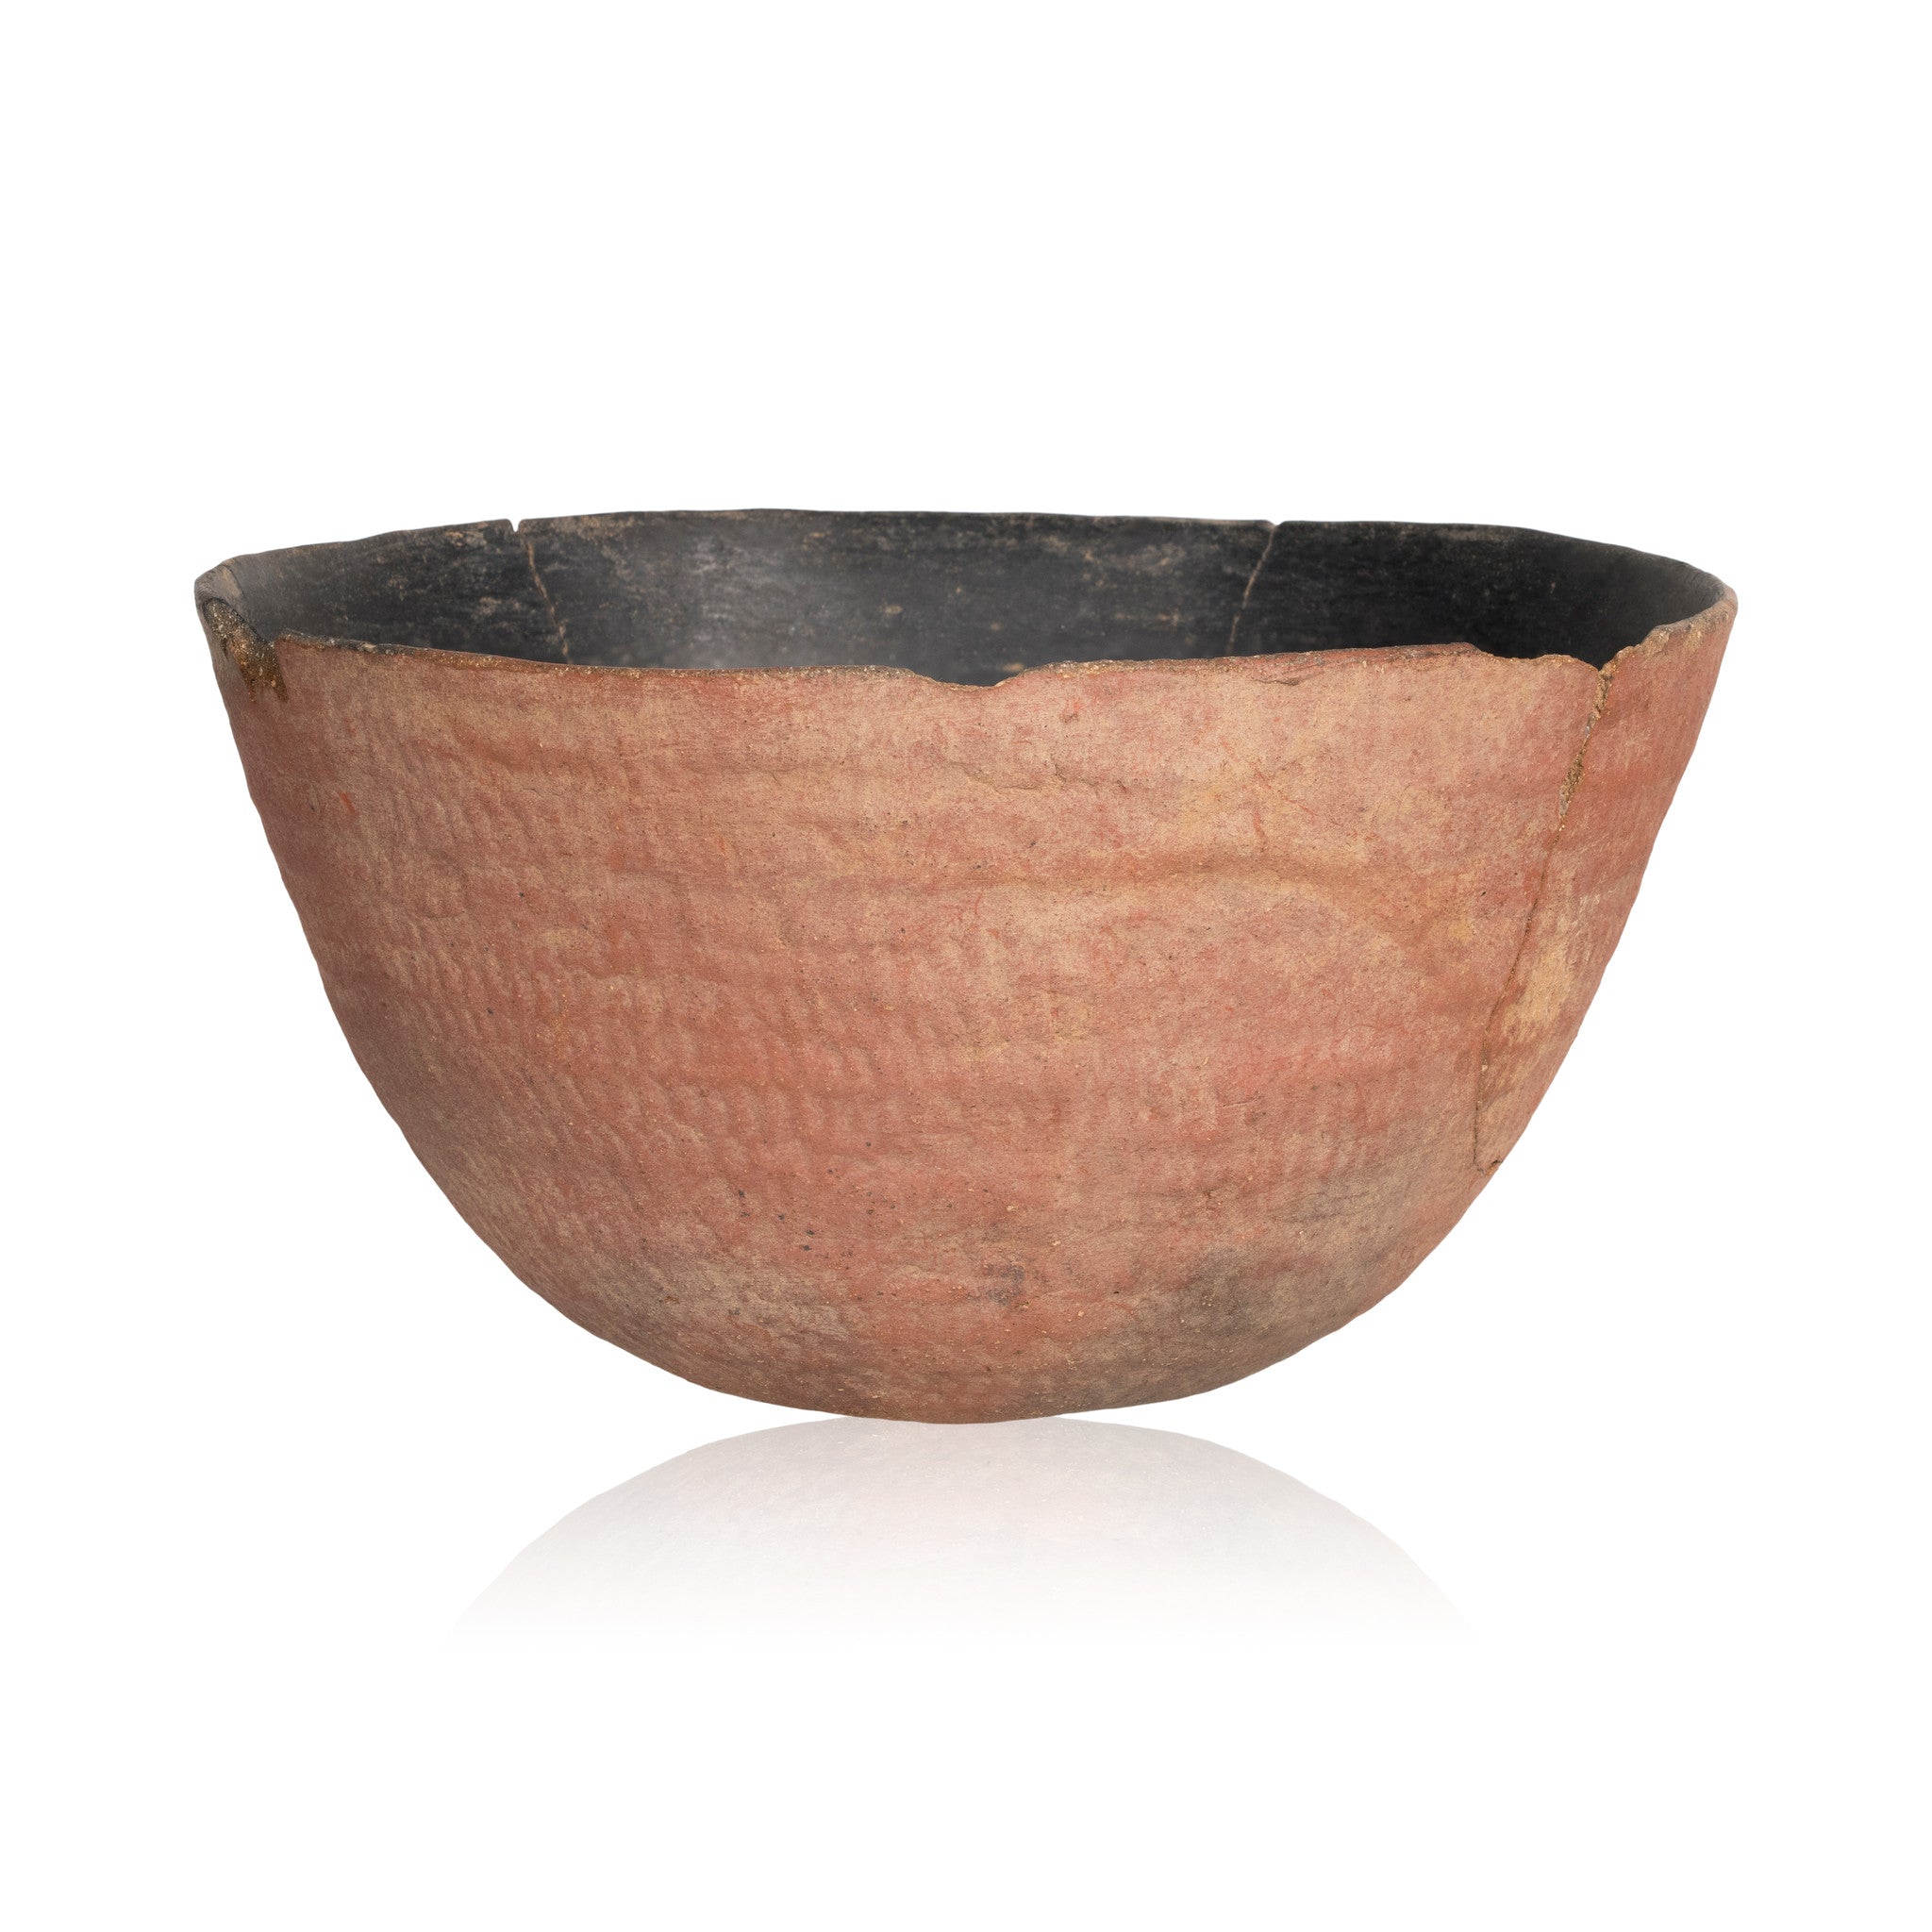 Salado Pottery Bowl, Native, Pottery, Prehistoric